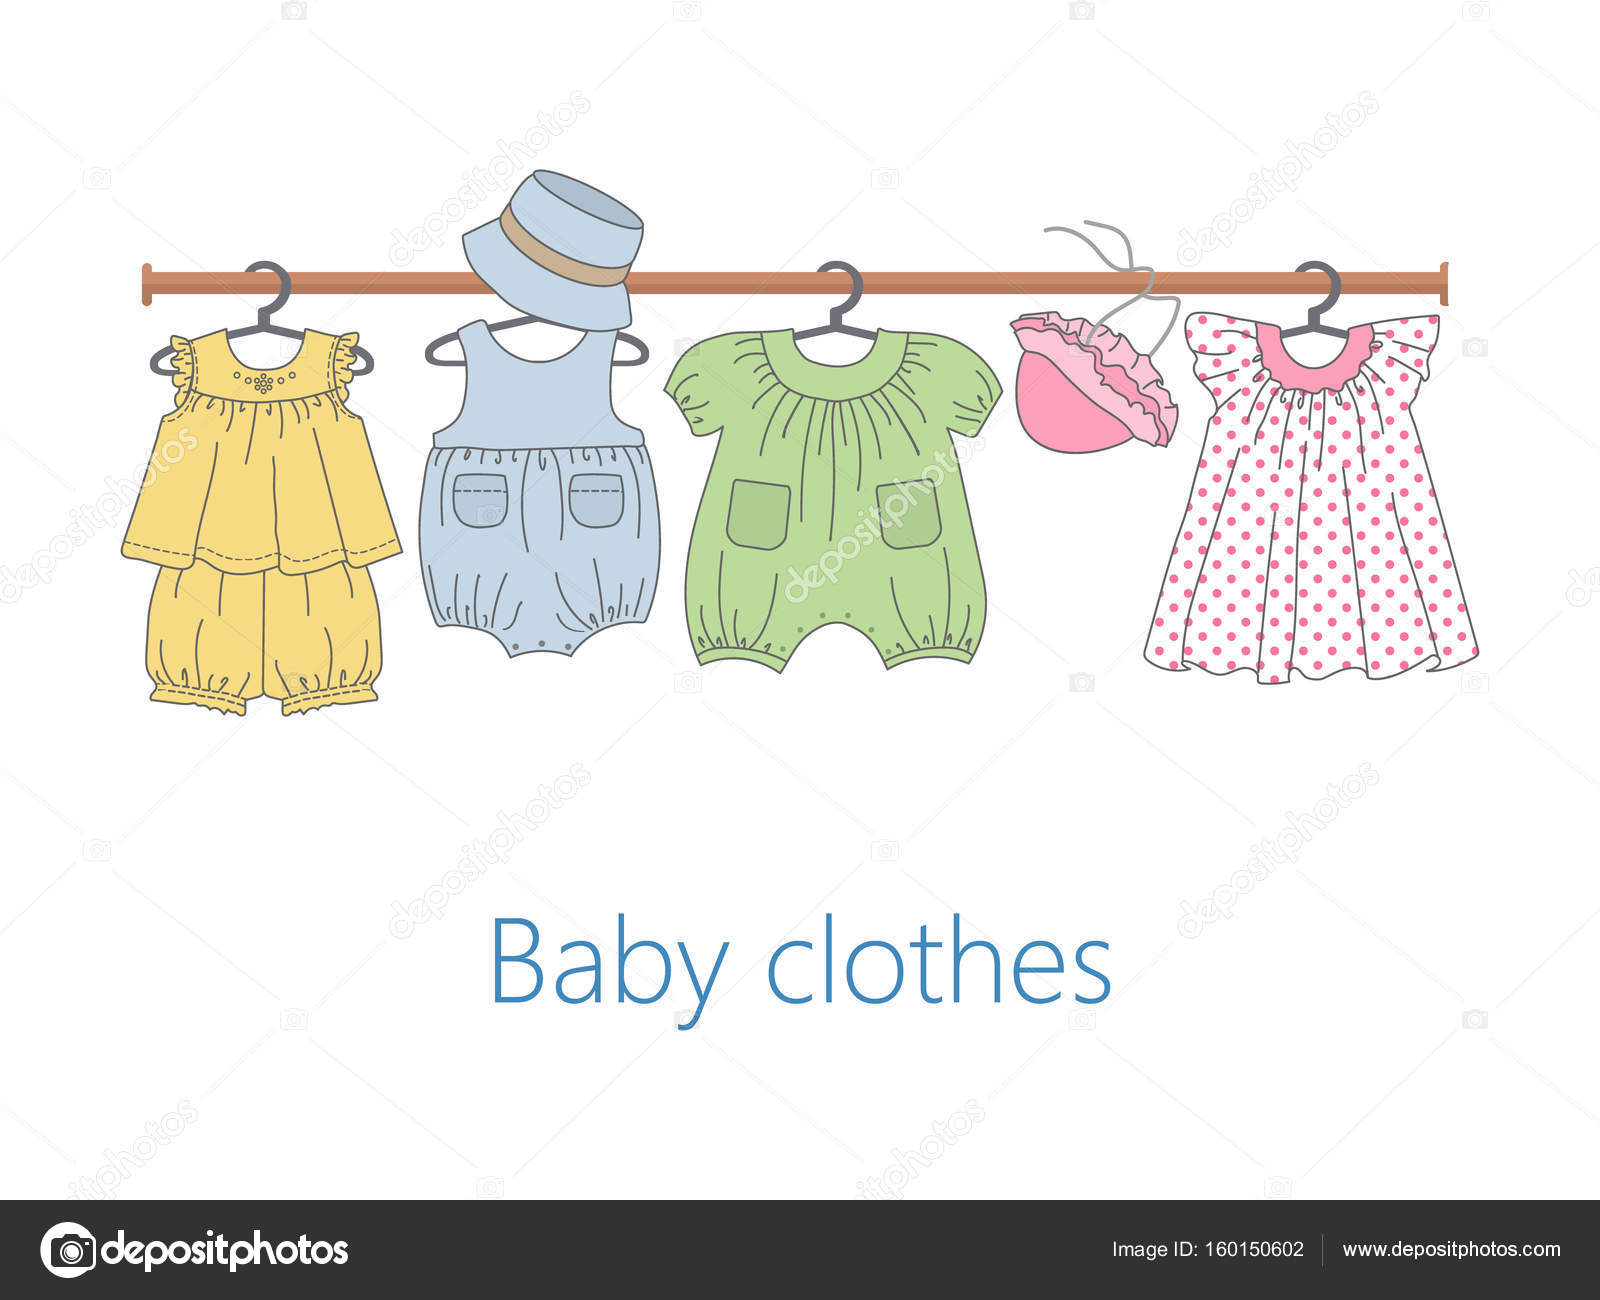 https://st3.depositphotos.com/8119216/16015/v/1600/depositphotos_160150602-stock-illustration-rack-with-baby-clothes-on.jpg